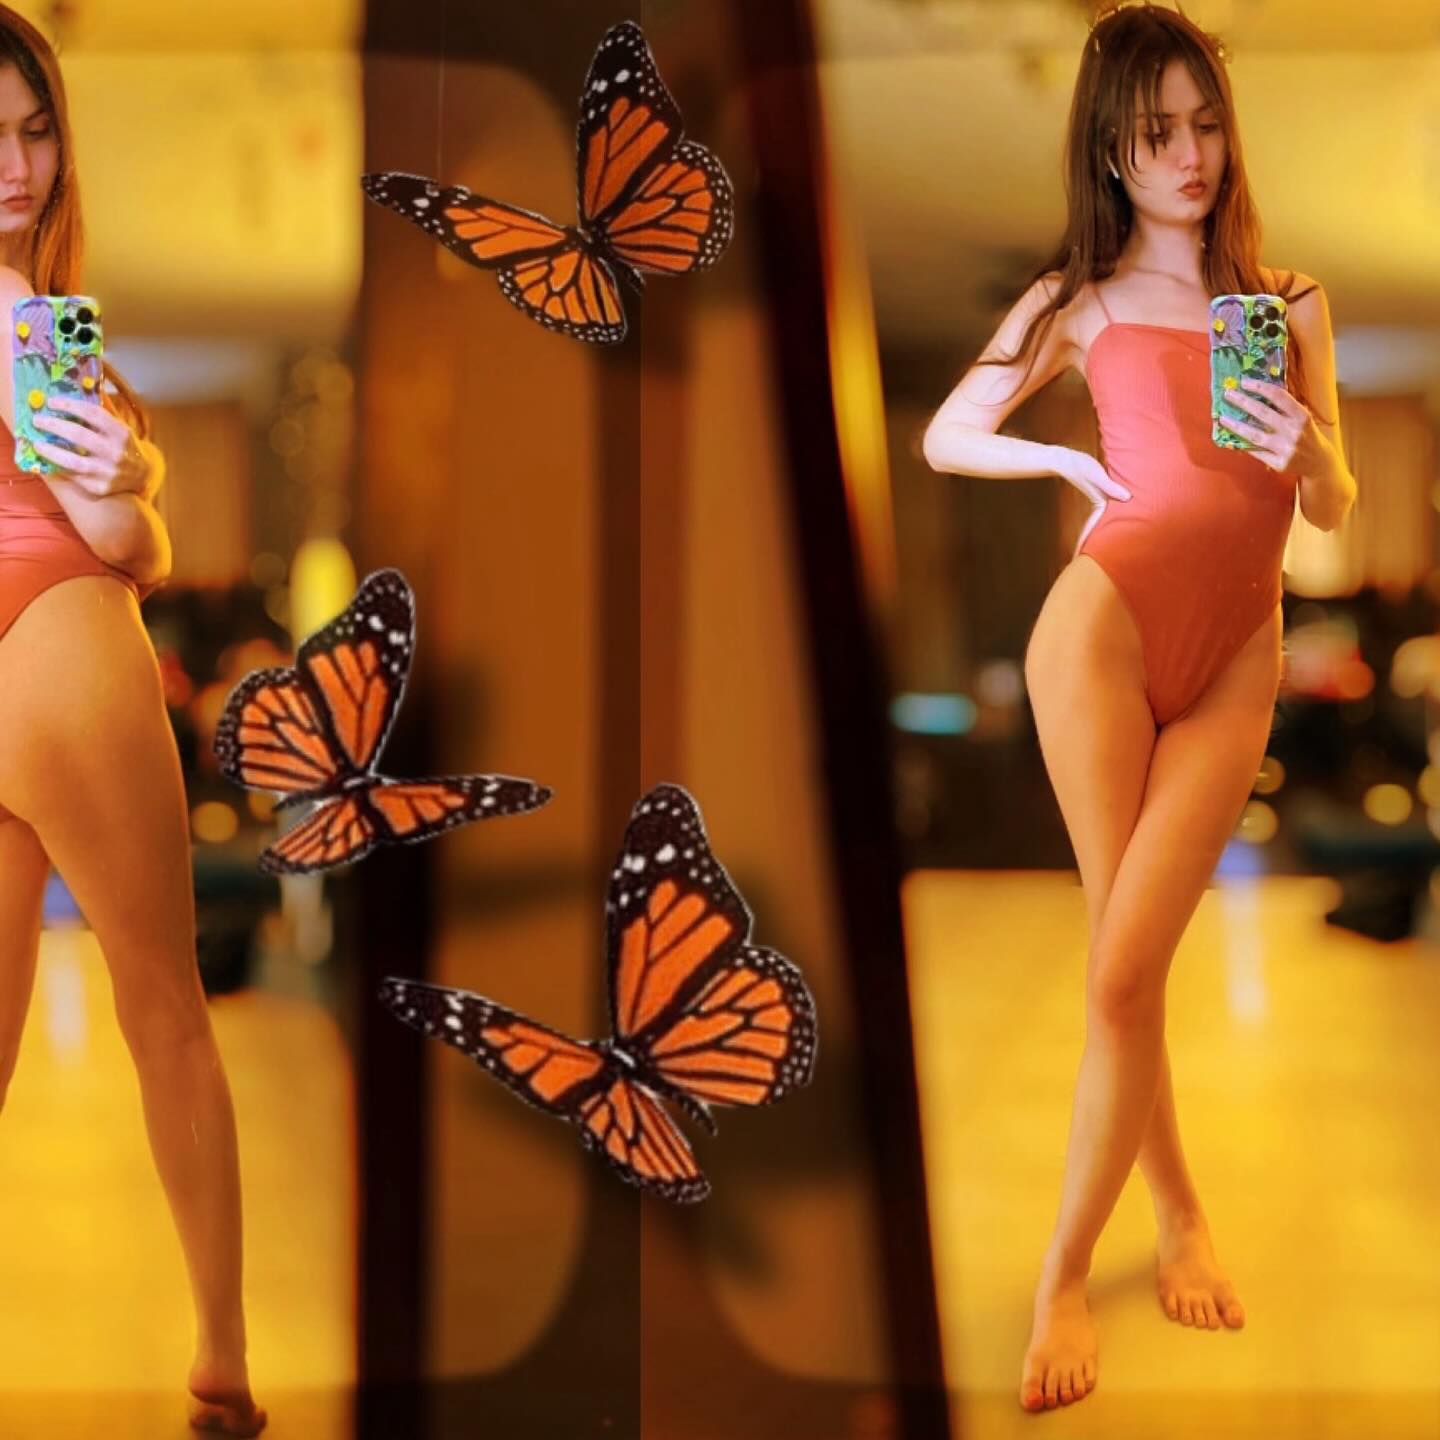 oh to be someone’s daydream 🧡
•
•
•
•
•
#vibes #pretty #selfie #mirrorselfie #pretty #cute #prettyvibes #explore #explorepage #explorepage✨ #lasvegas #vegas #follow #only #baddie #daydream #edit #edits #orange #butterfly #butterflies #picsart